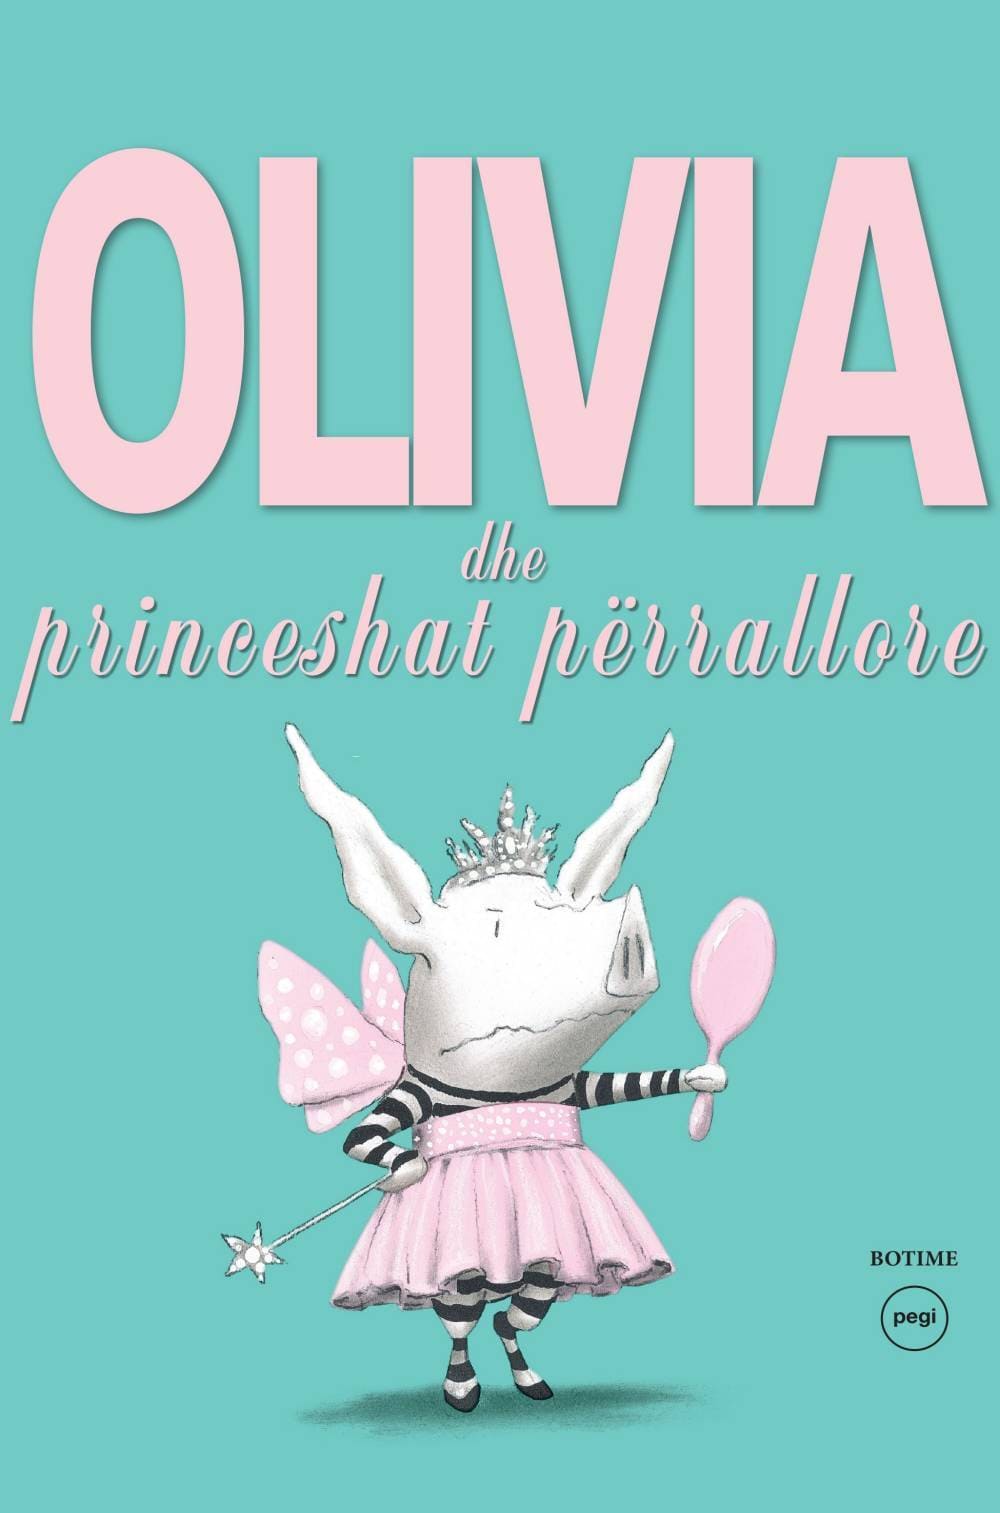 images/book-images/olivia-dhe-princesha-perrallore.jpg